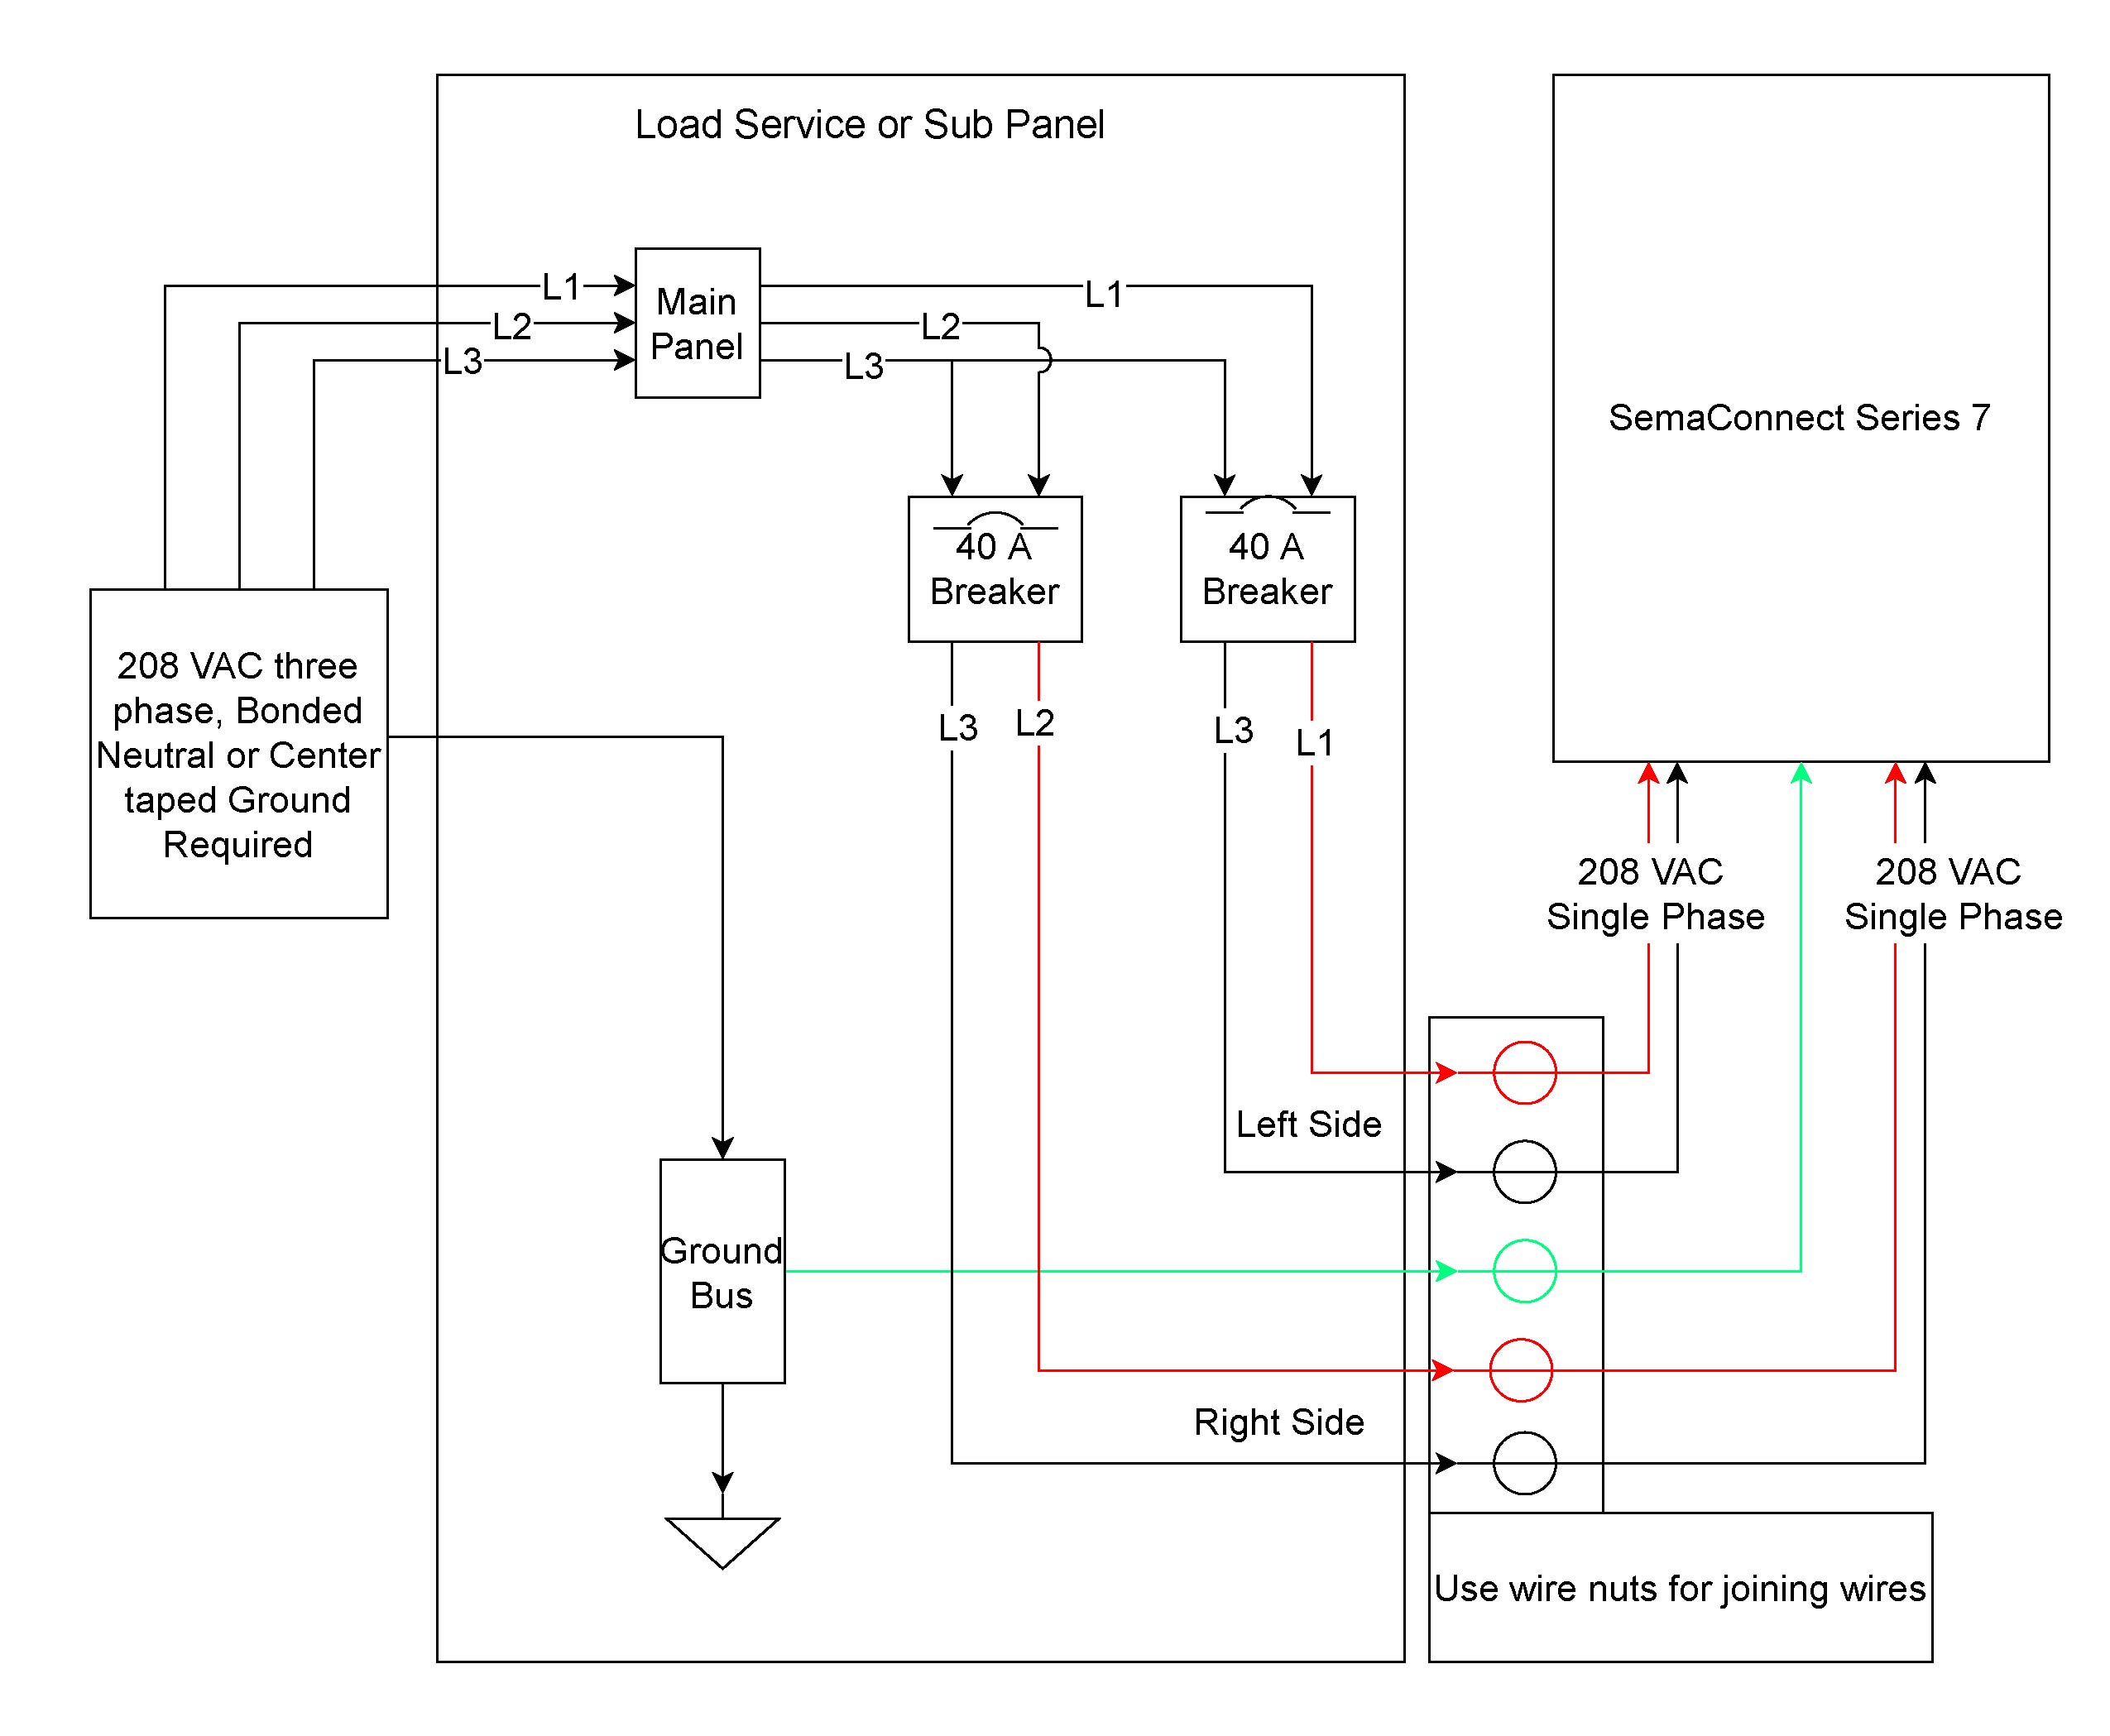 circulating blower assembly 27004 wiring diagram